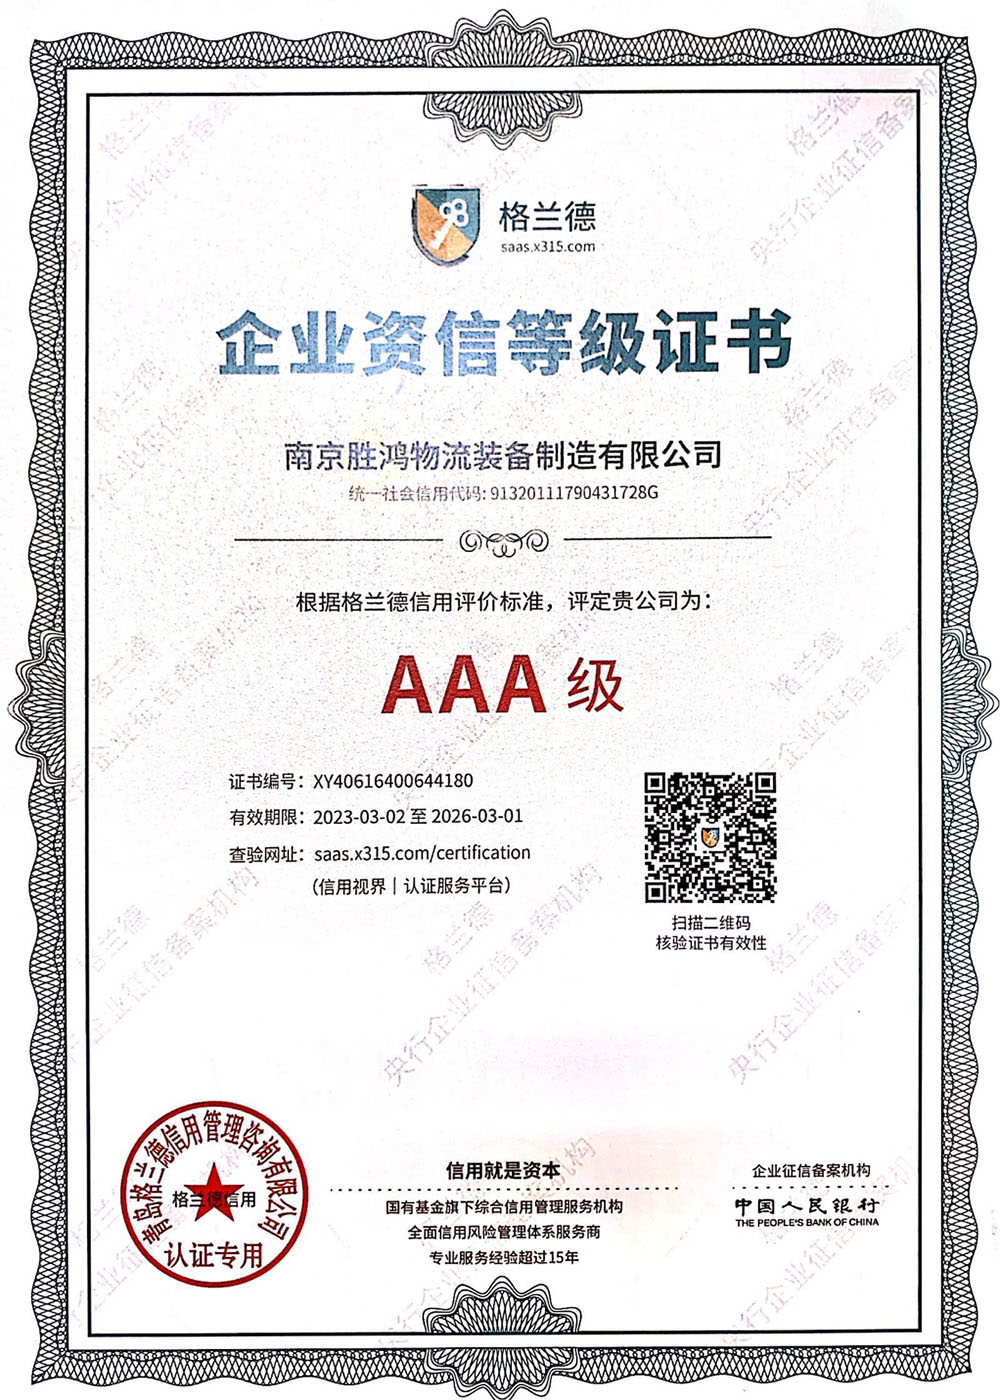 AAA级企业资信品级证书